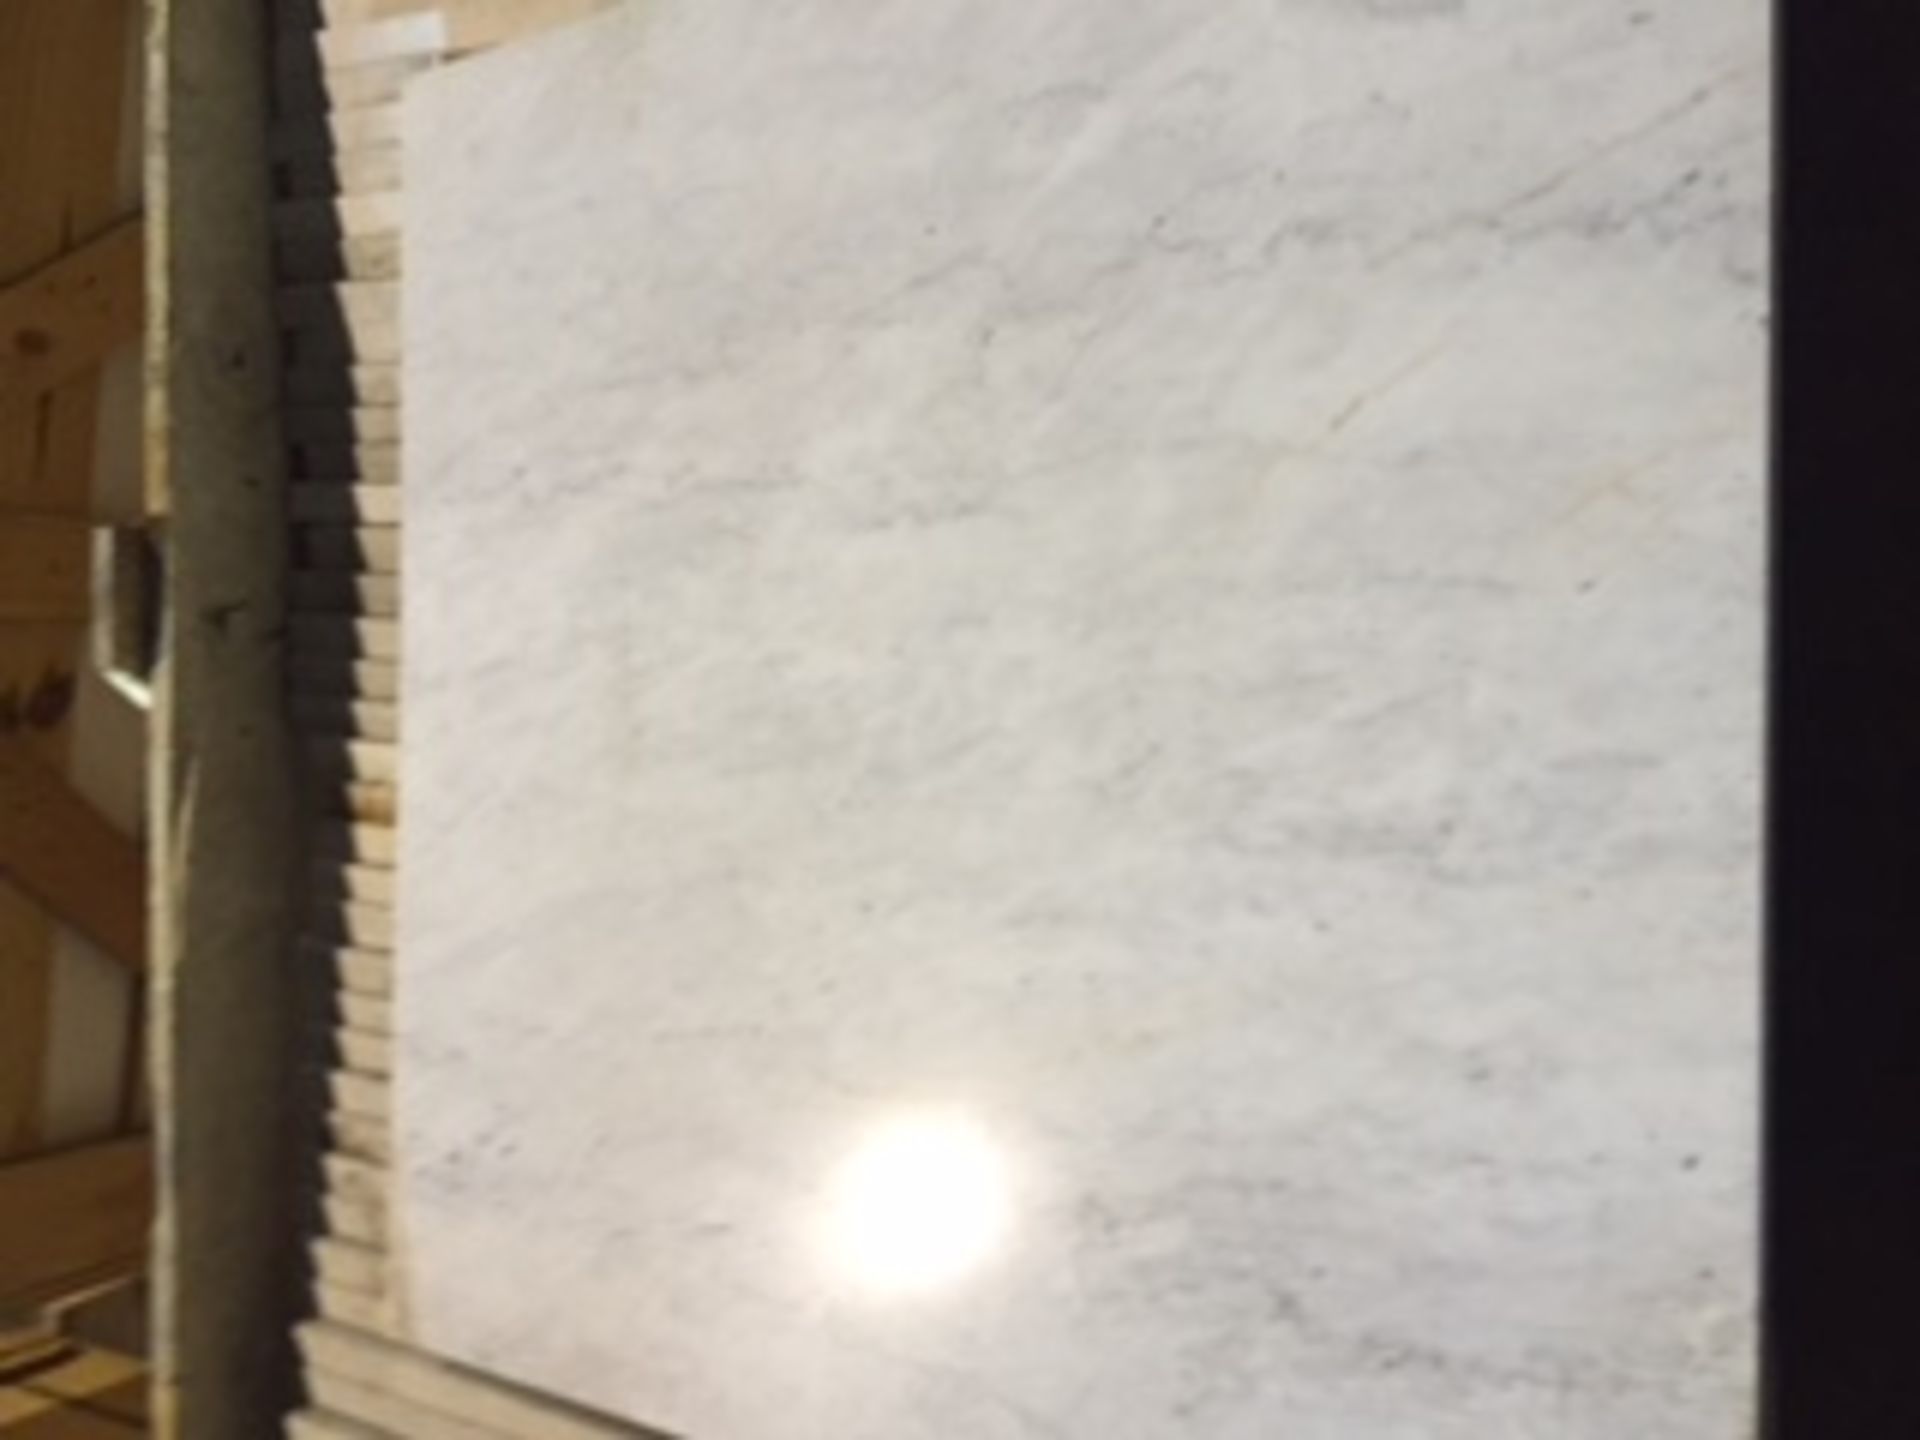 Quantity of 49 Royal White Marble Slabs 60cmx60cmx2 cm - Image 3 of 3